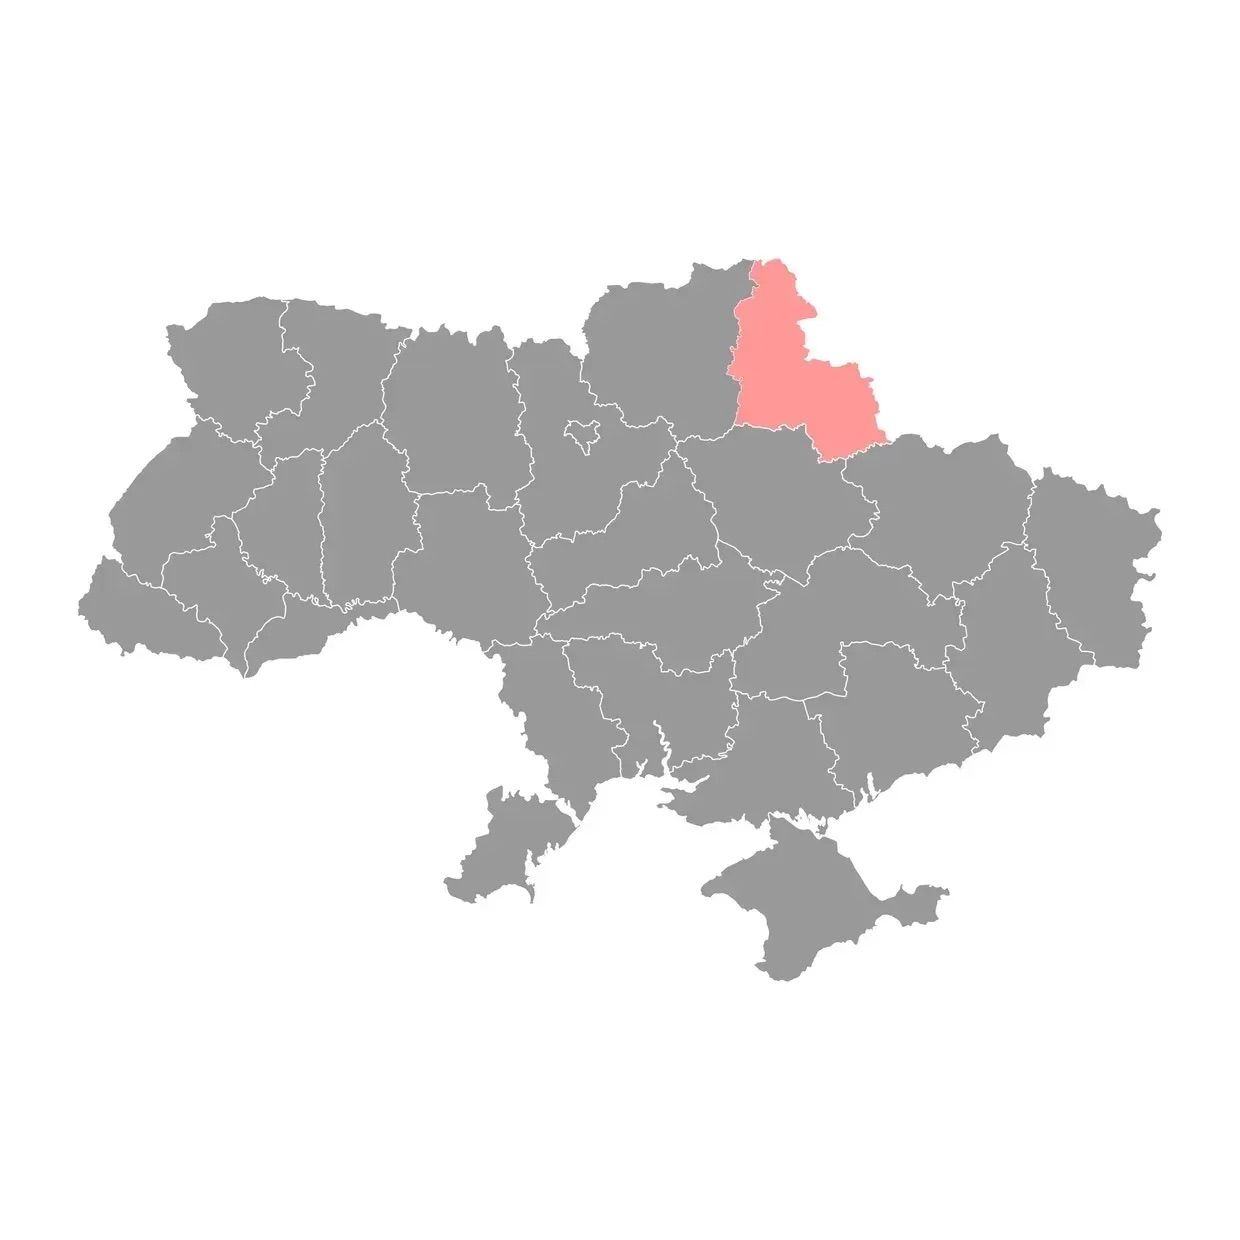 Russia attacks 12 communities in Sumy Oblast